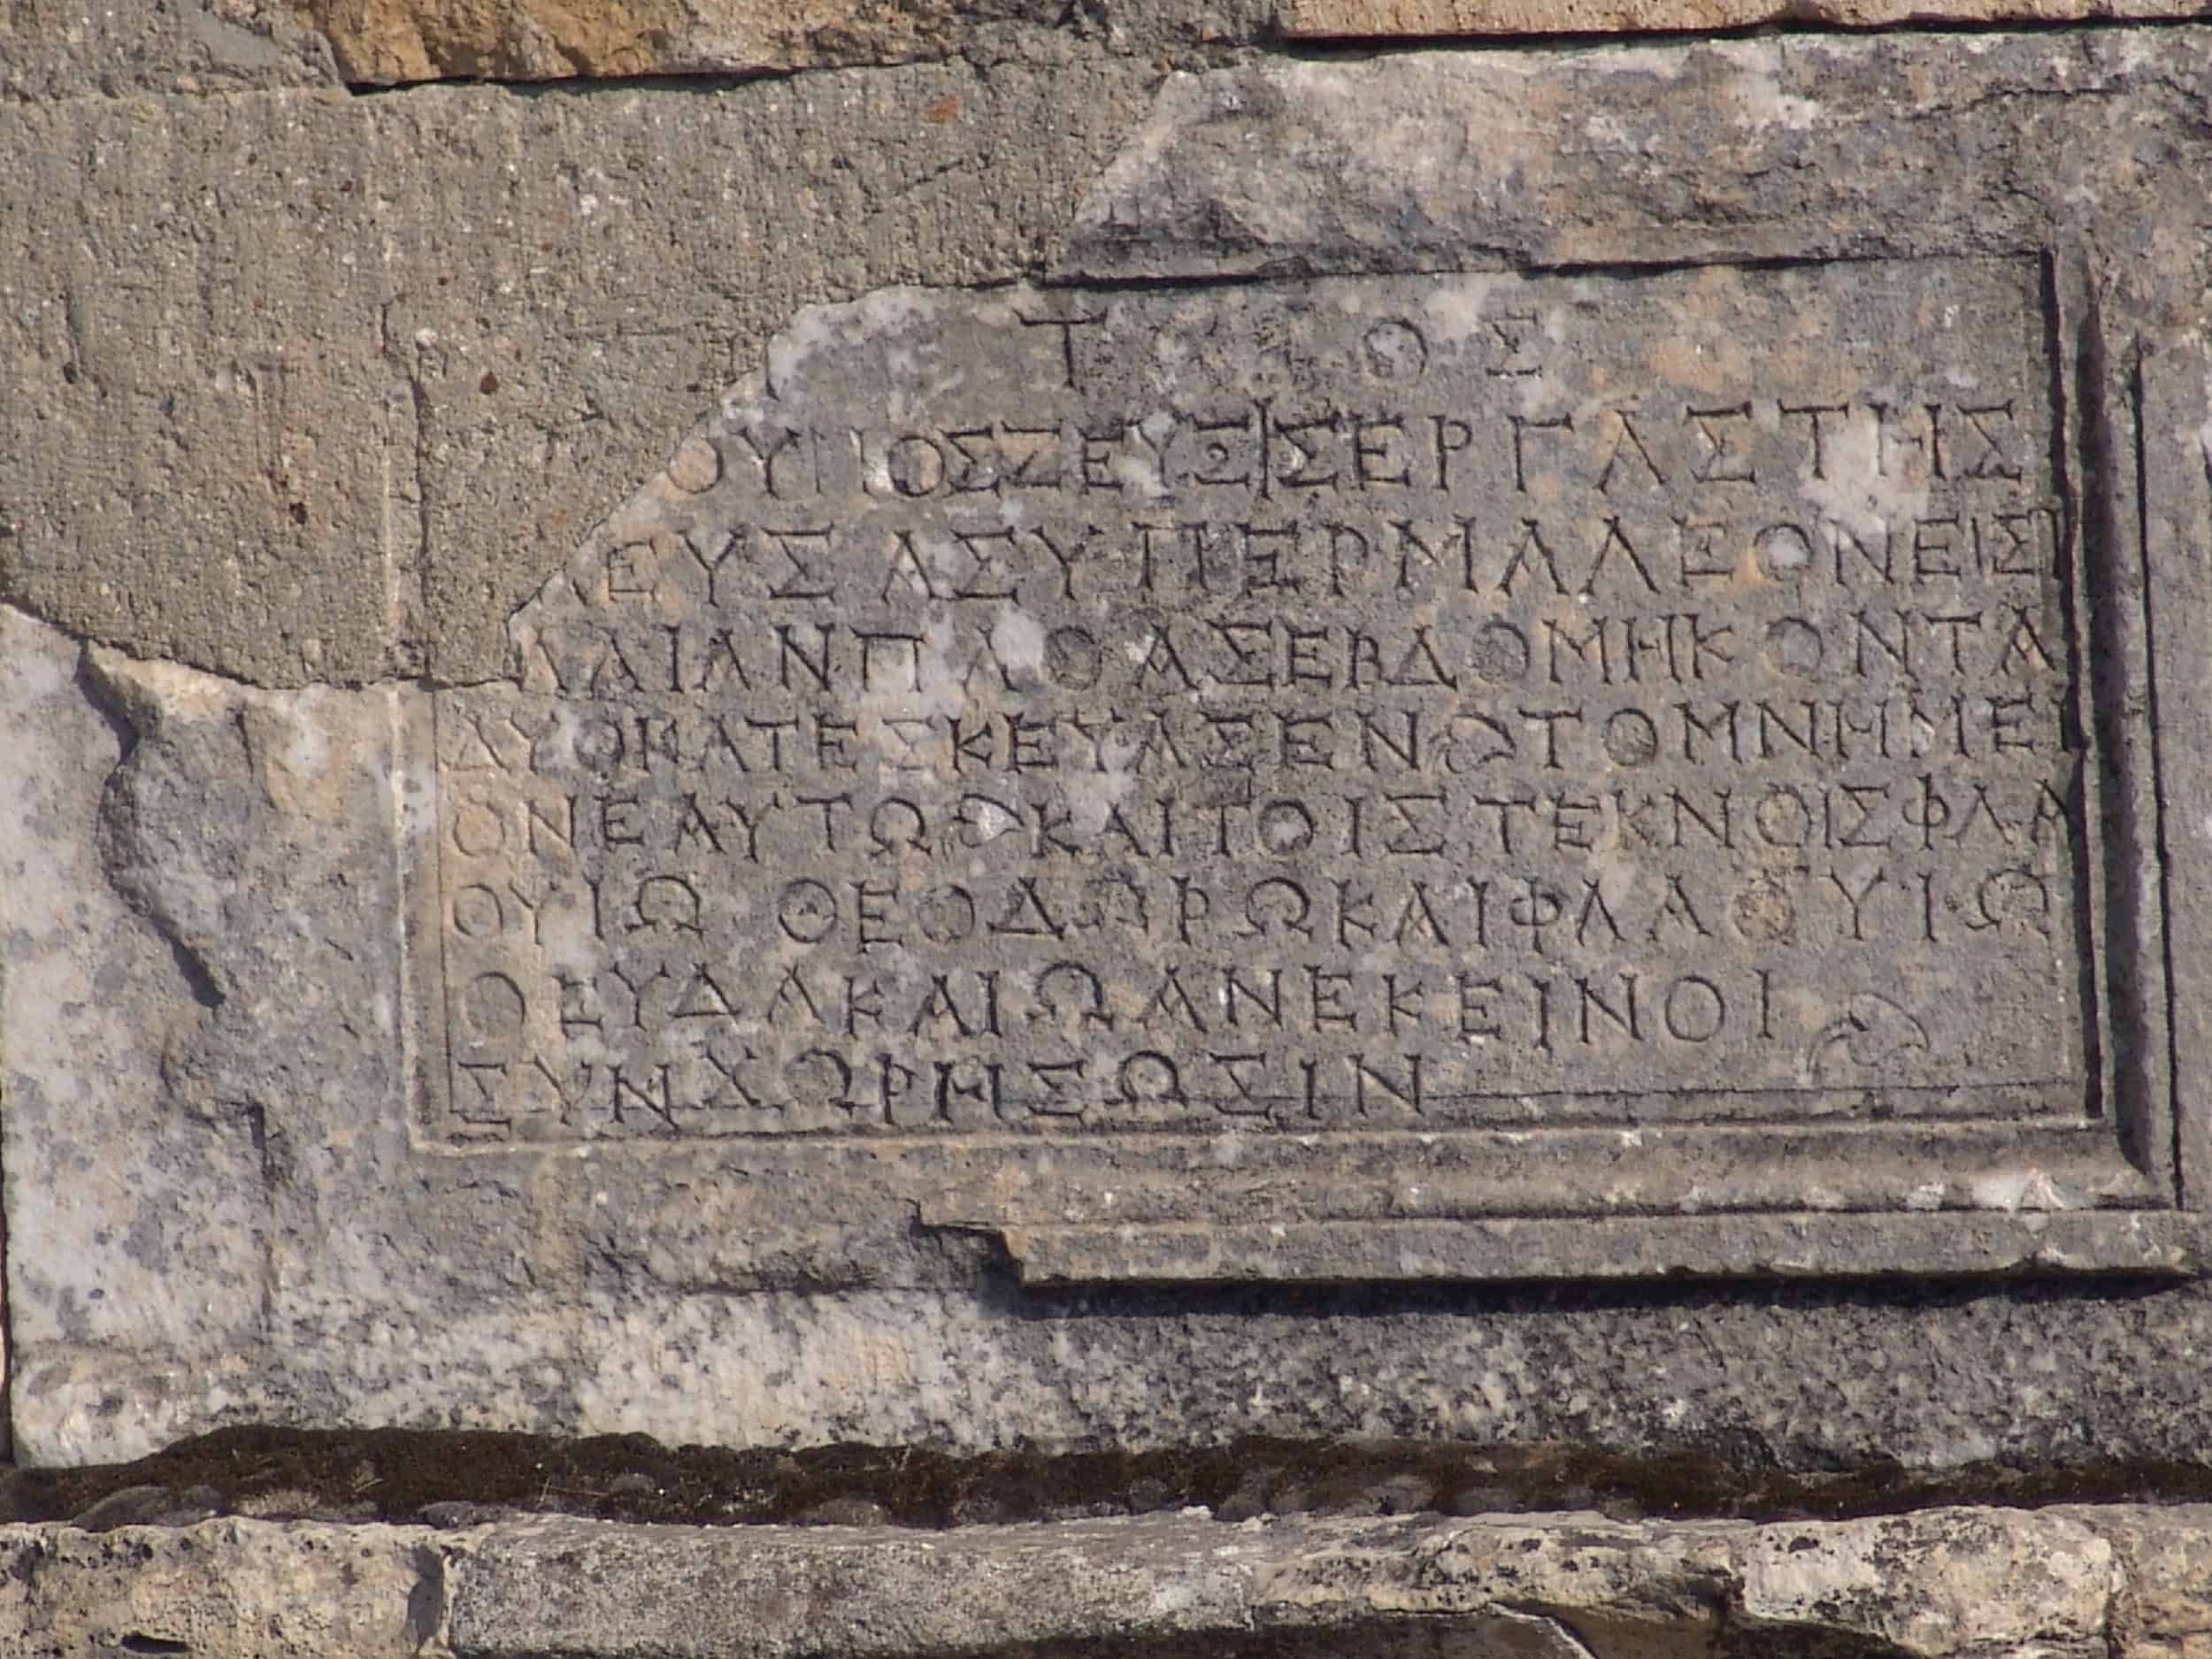 Greek inscription on a monumental type tomb at the Hierapolis Necropolis